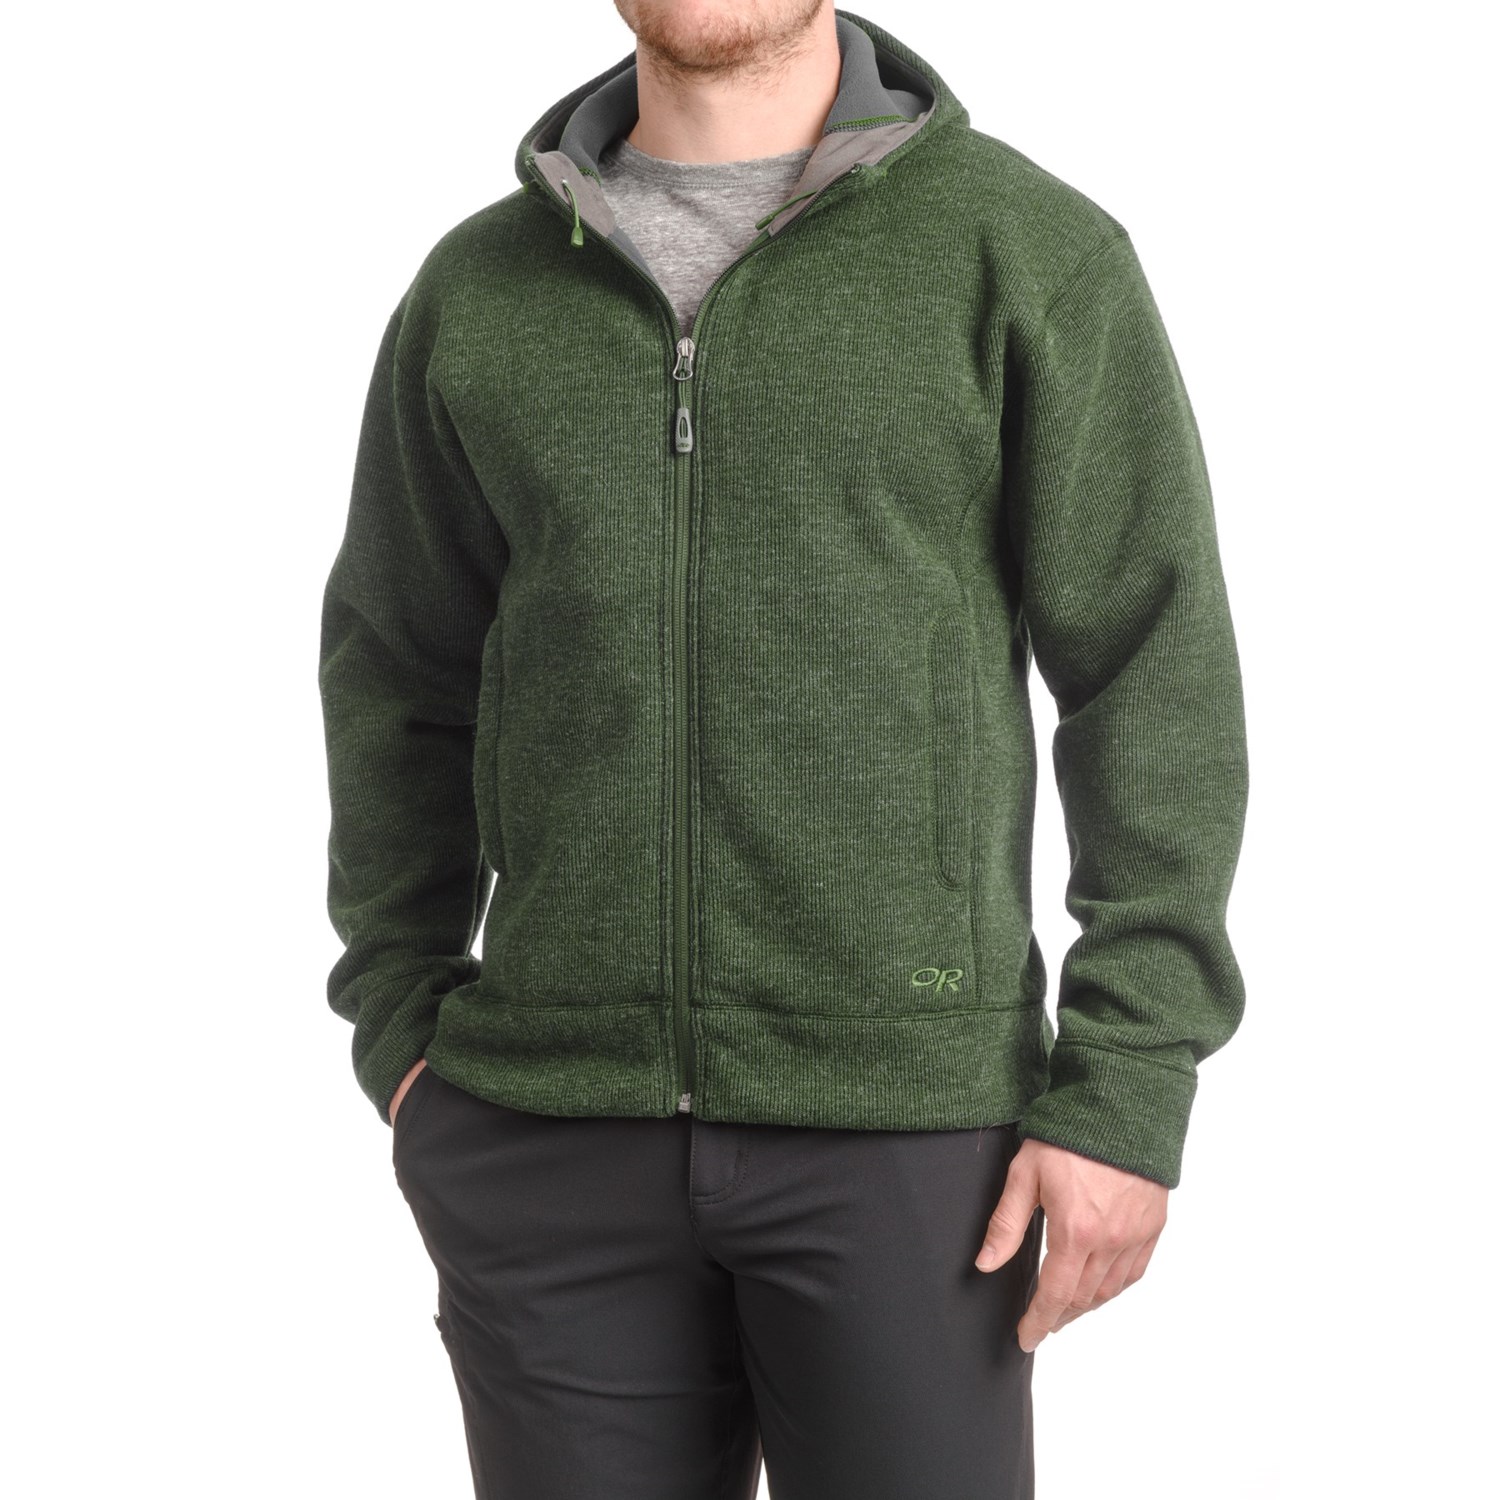 Outdoor Research Exit Sweatshirt (For Men) - Save 60%